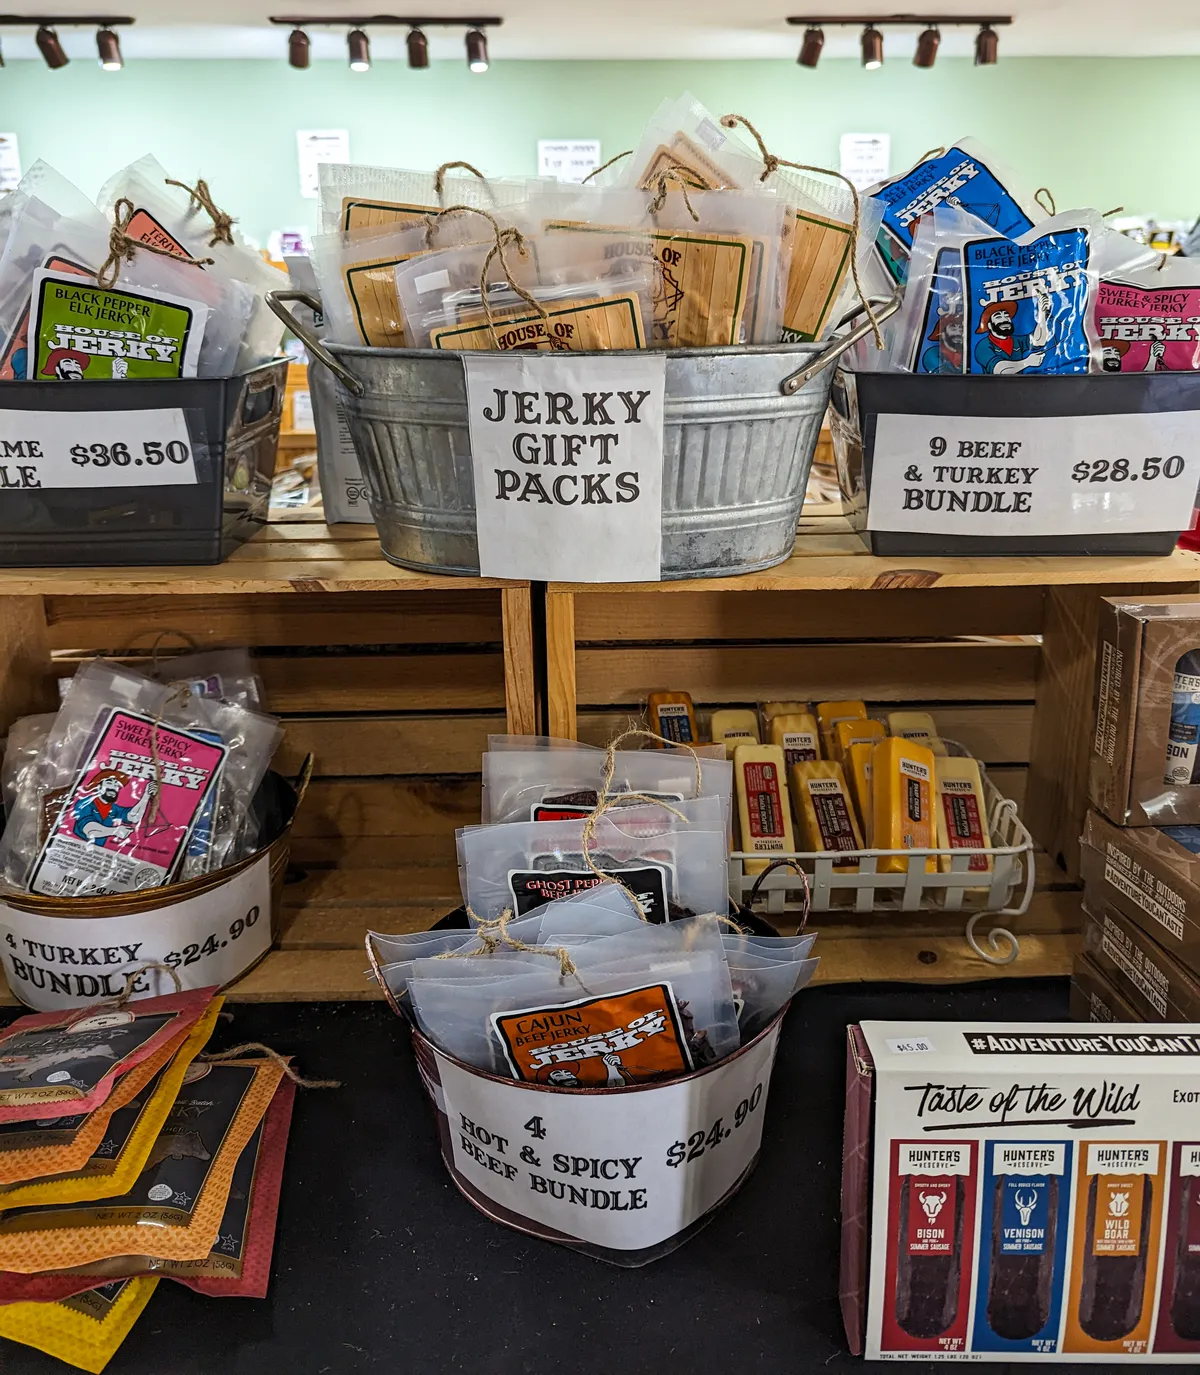 jerky gift packs and bundles on display